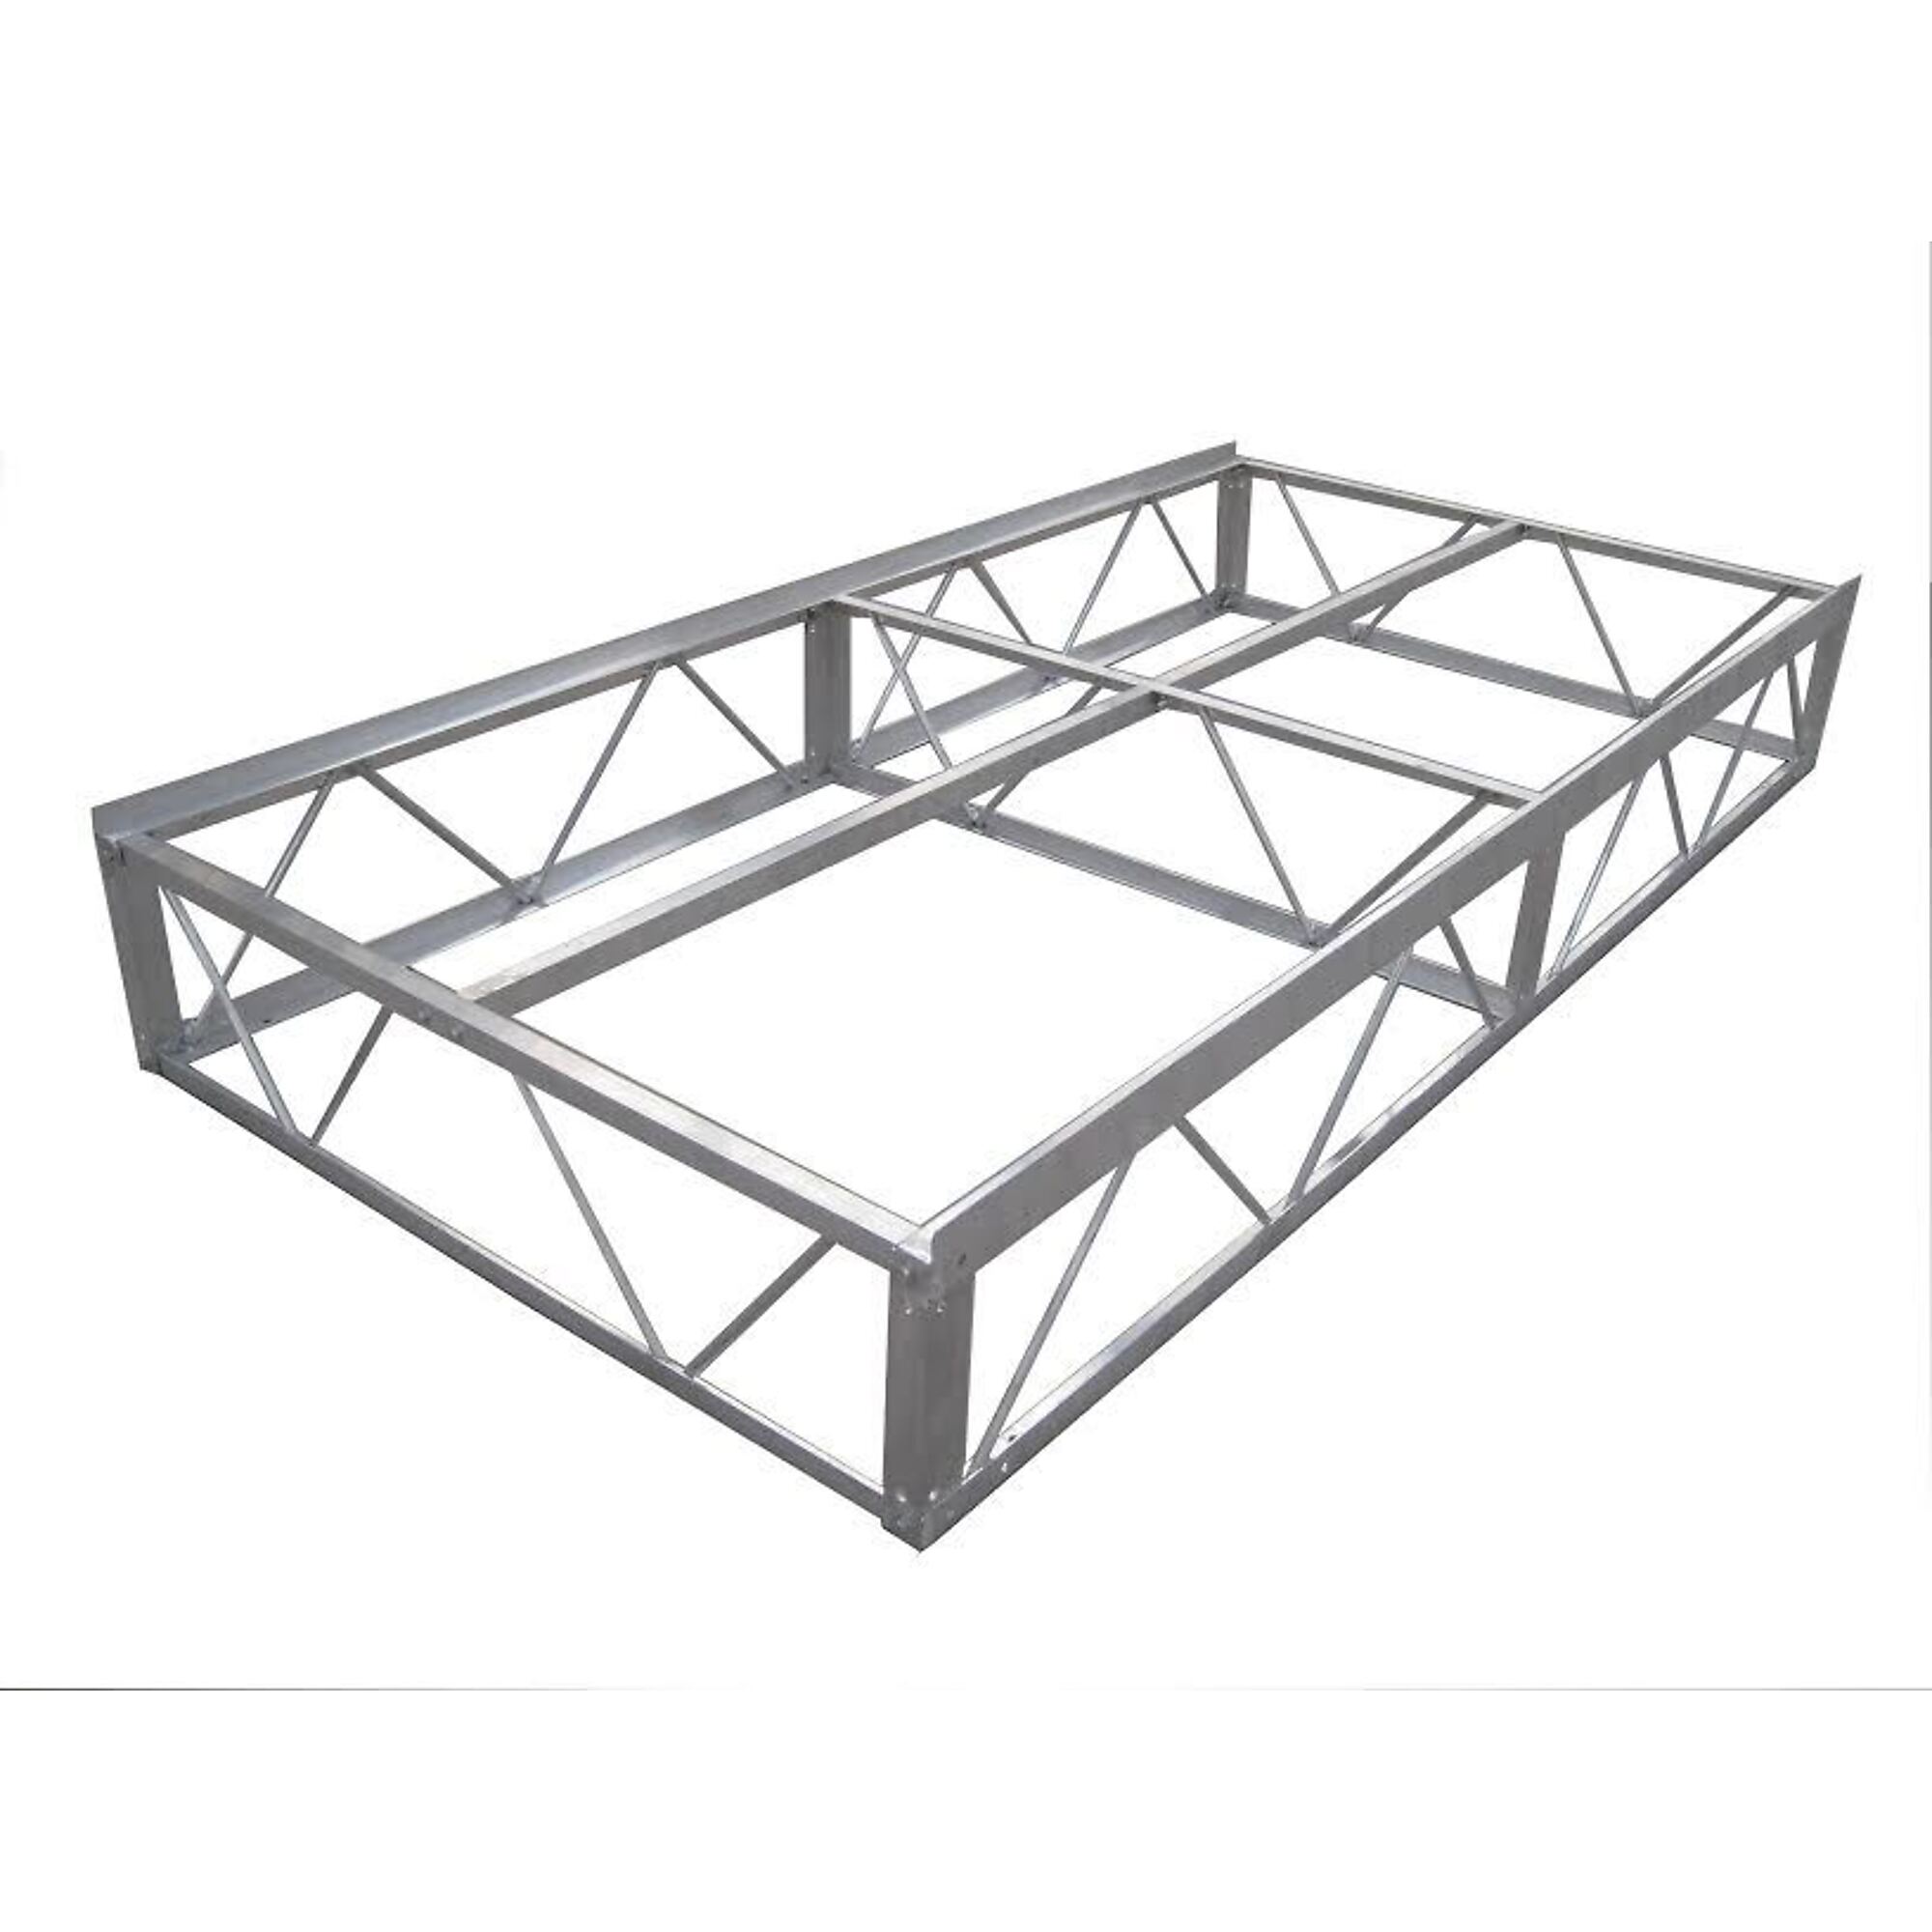 Patriot Docks, 4ft.X8ft. Aluminum Dock Frame Assembly, Product Type Hardware, Length 96 in, Width 48 in, Model 10800